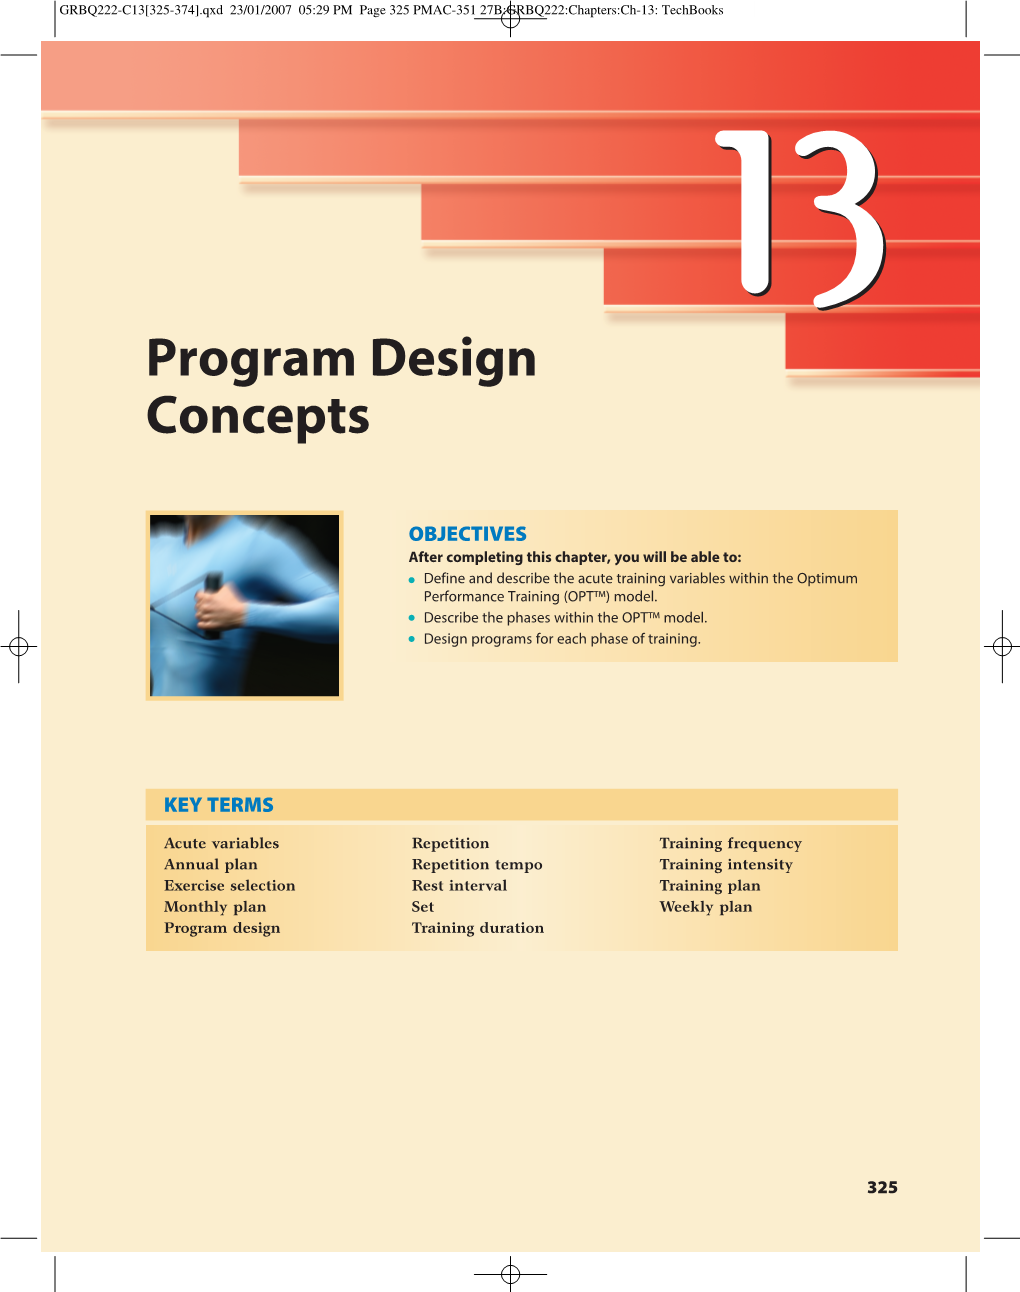 Program Design Concepts